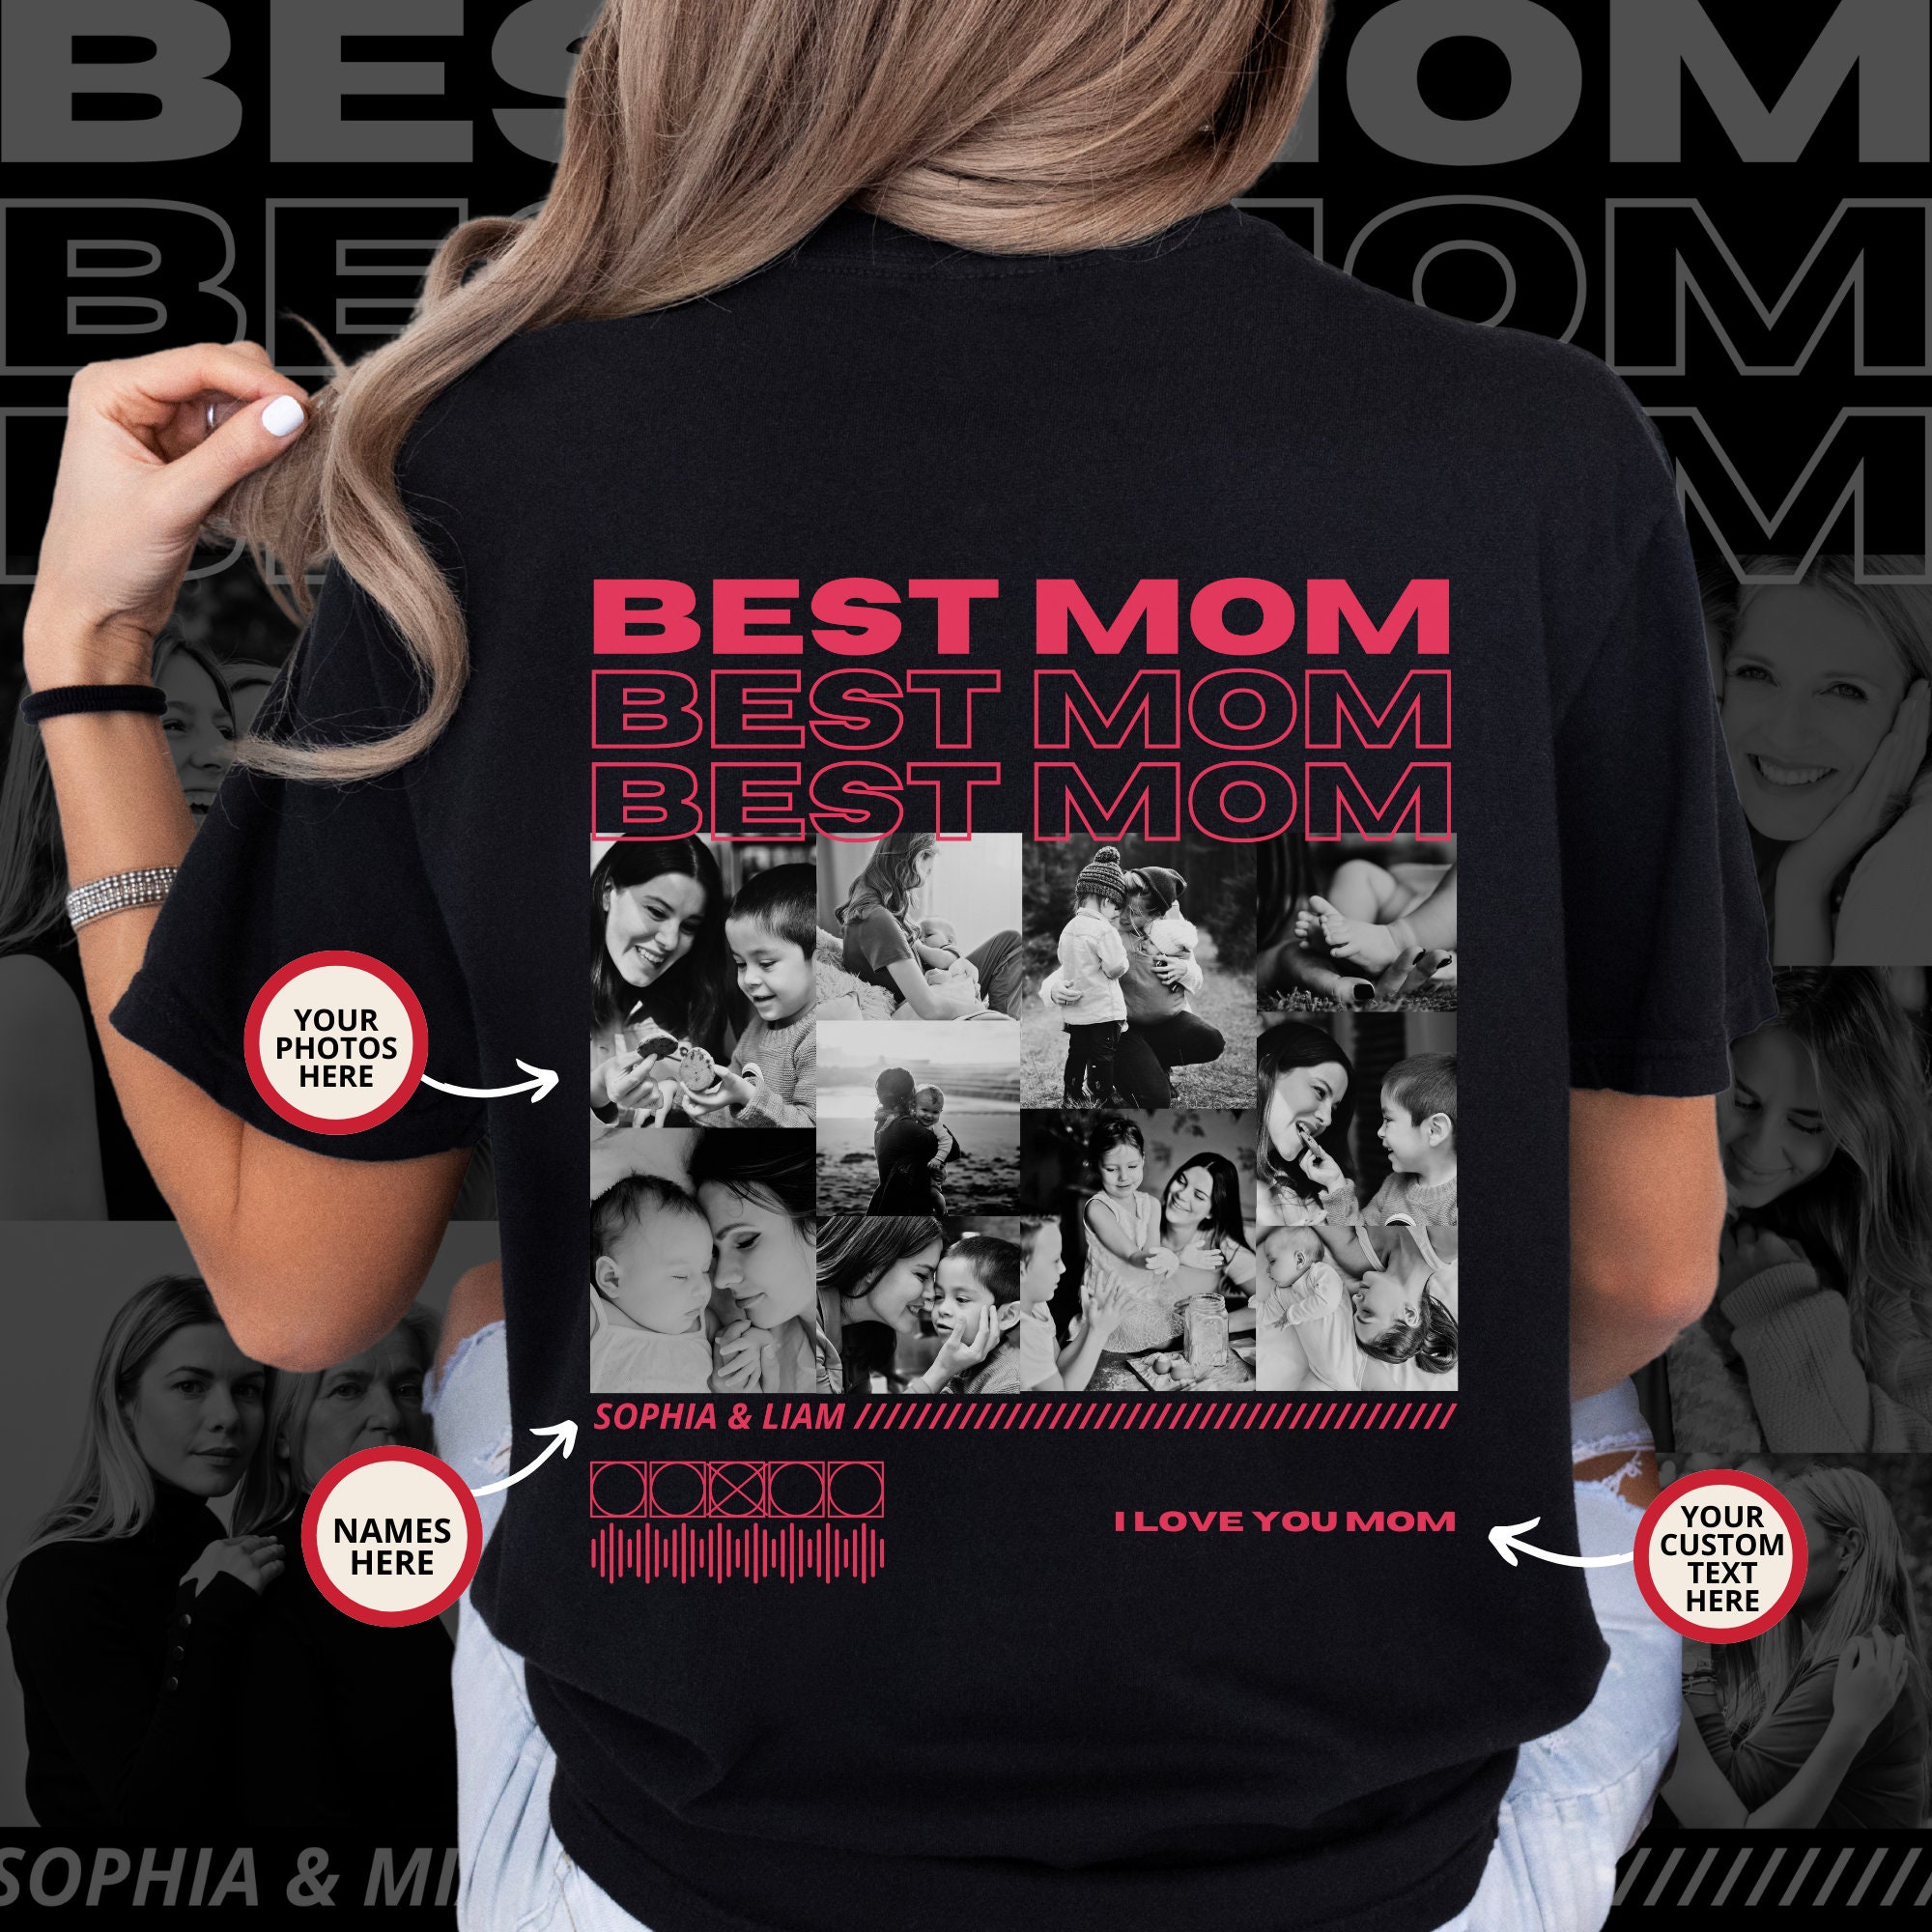 Best Mom Shirt, Only You Shirt, Mom Collage T-Shirt, Custom Mom Photo Shirt